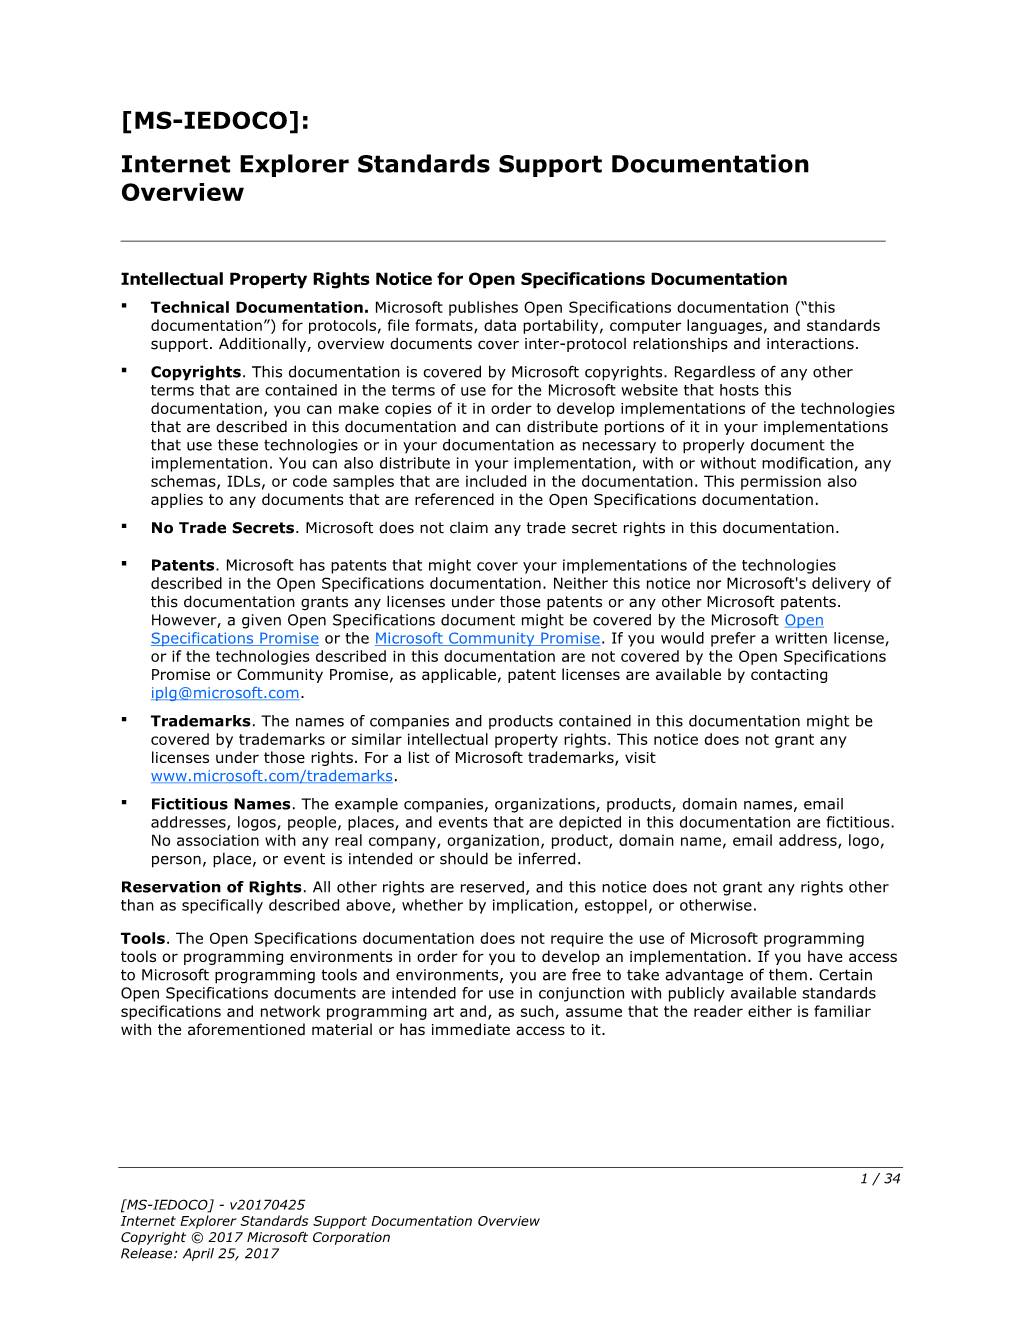 MS-IEDOCO]: Internet Explorer Standards Support Documentation Overview